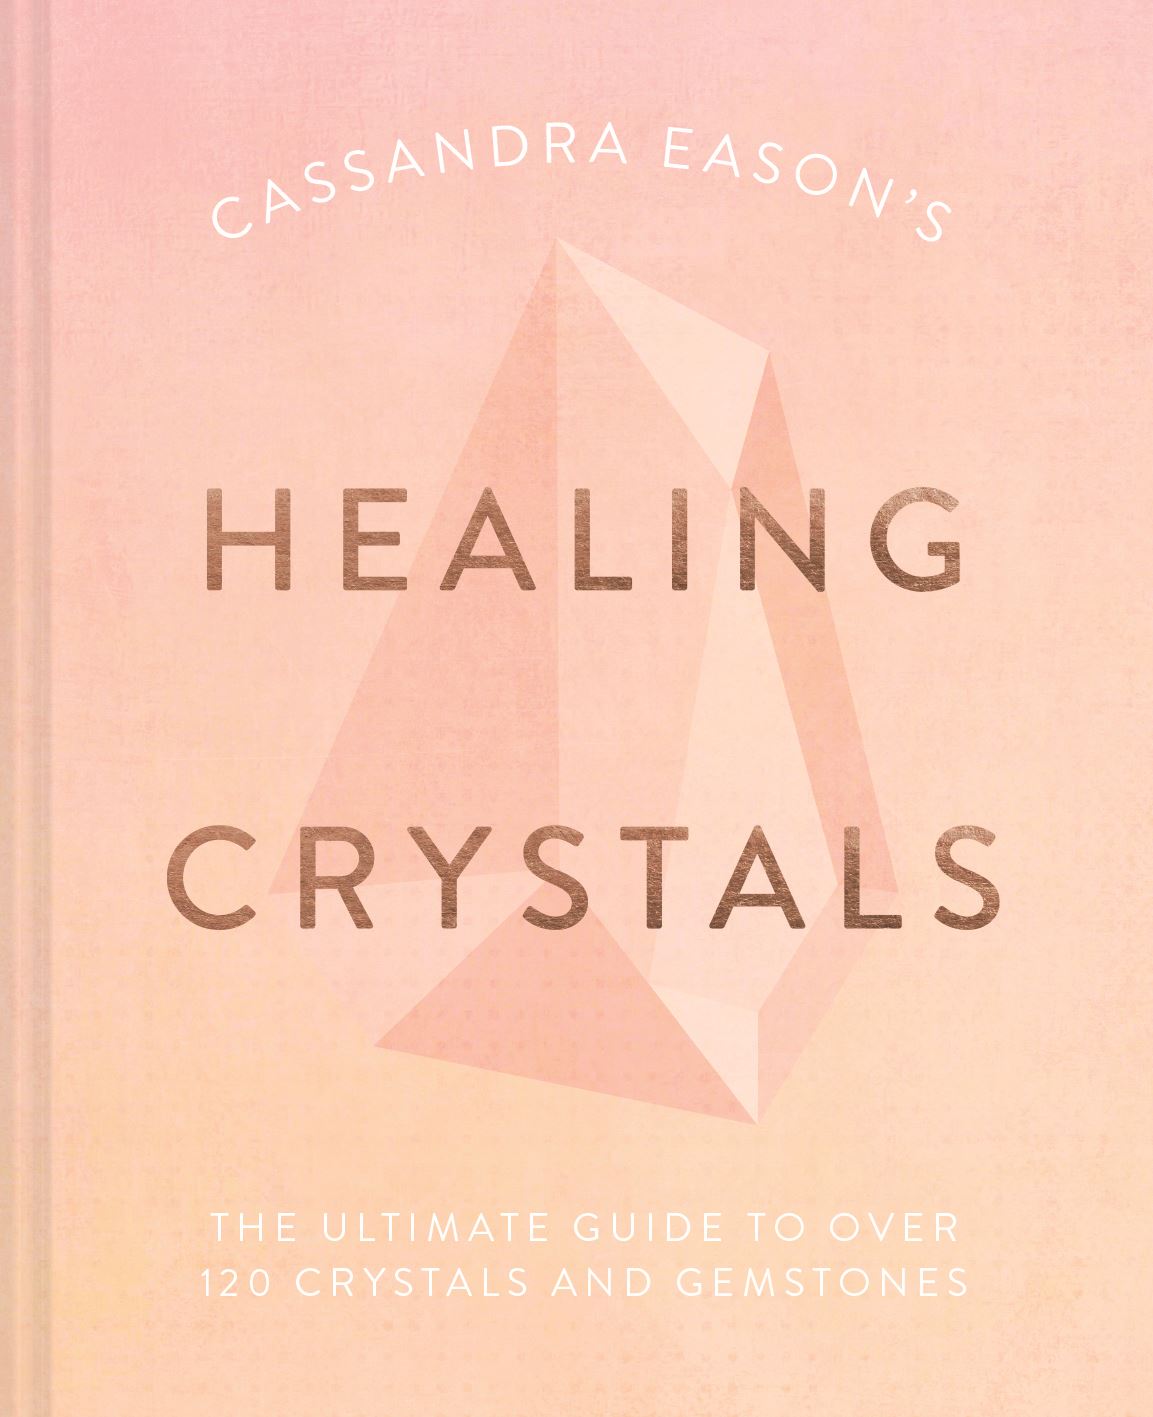 Cassandra Easons Healing Crystals